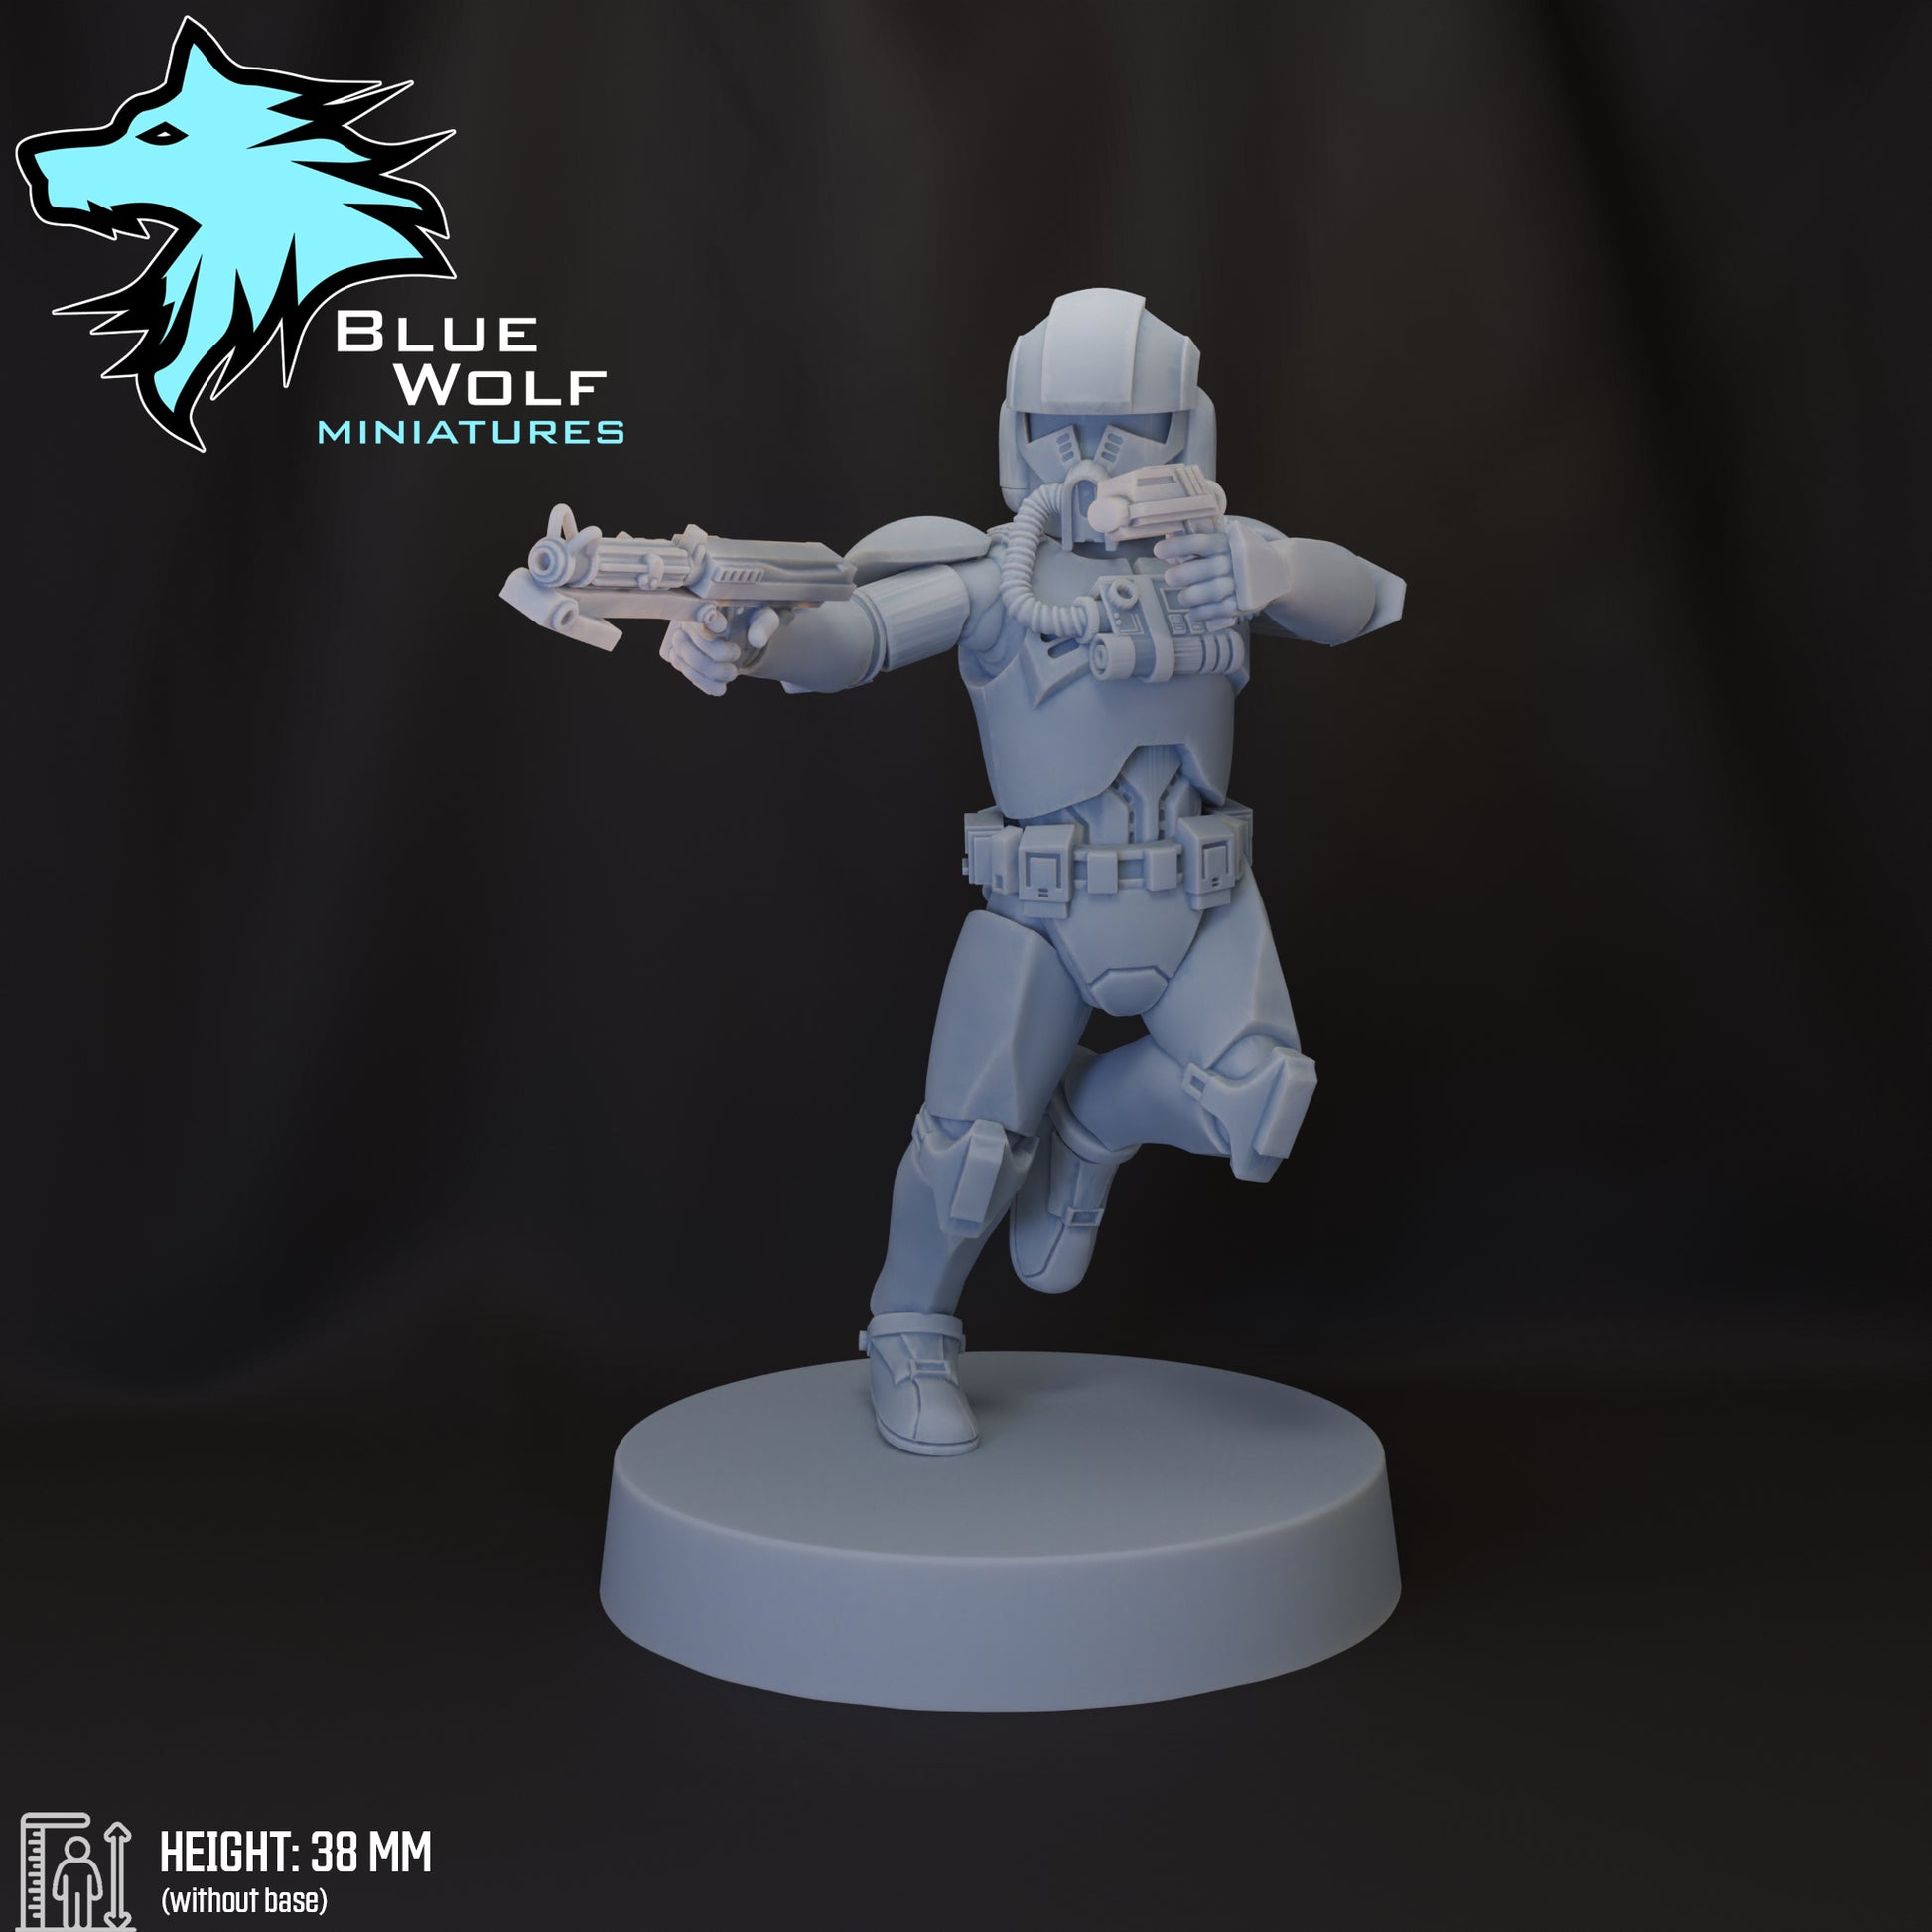 P1 Clone Pilot Commander ‧ 2 Varianten ‧ Blue Wolf Miniatures ‧ 1:48 Scale ‧ 35mm.